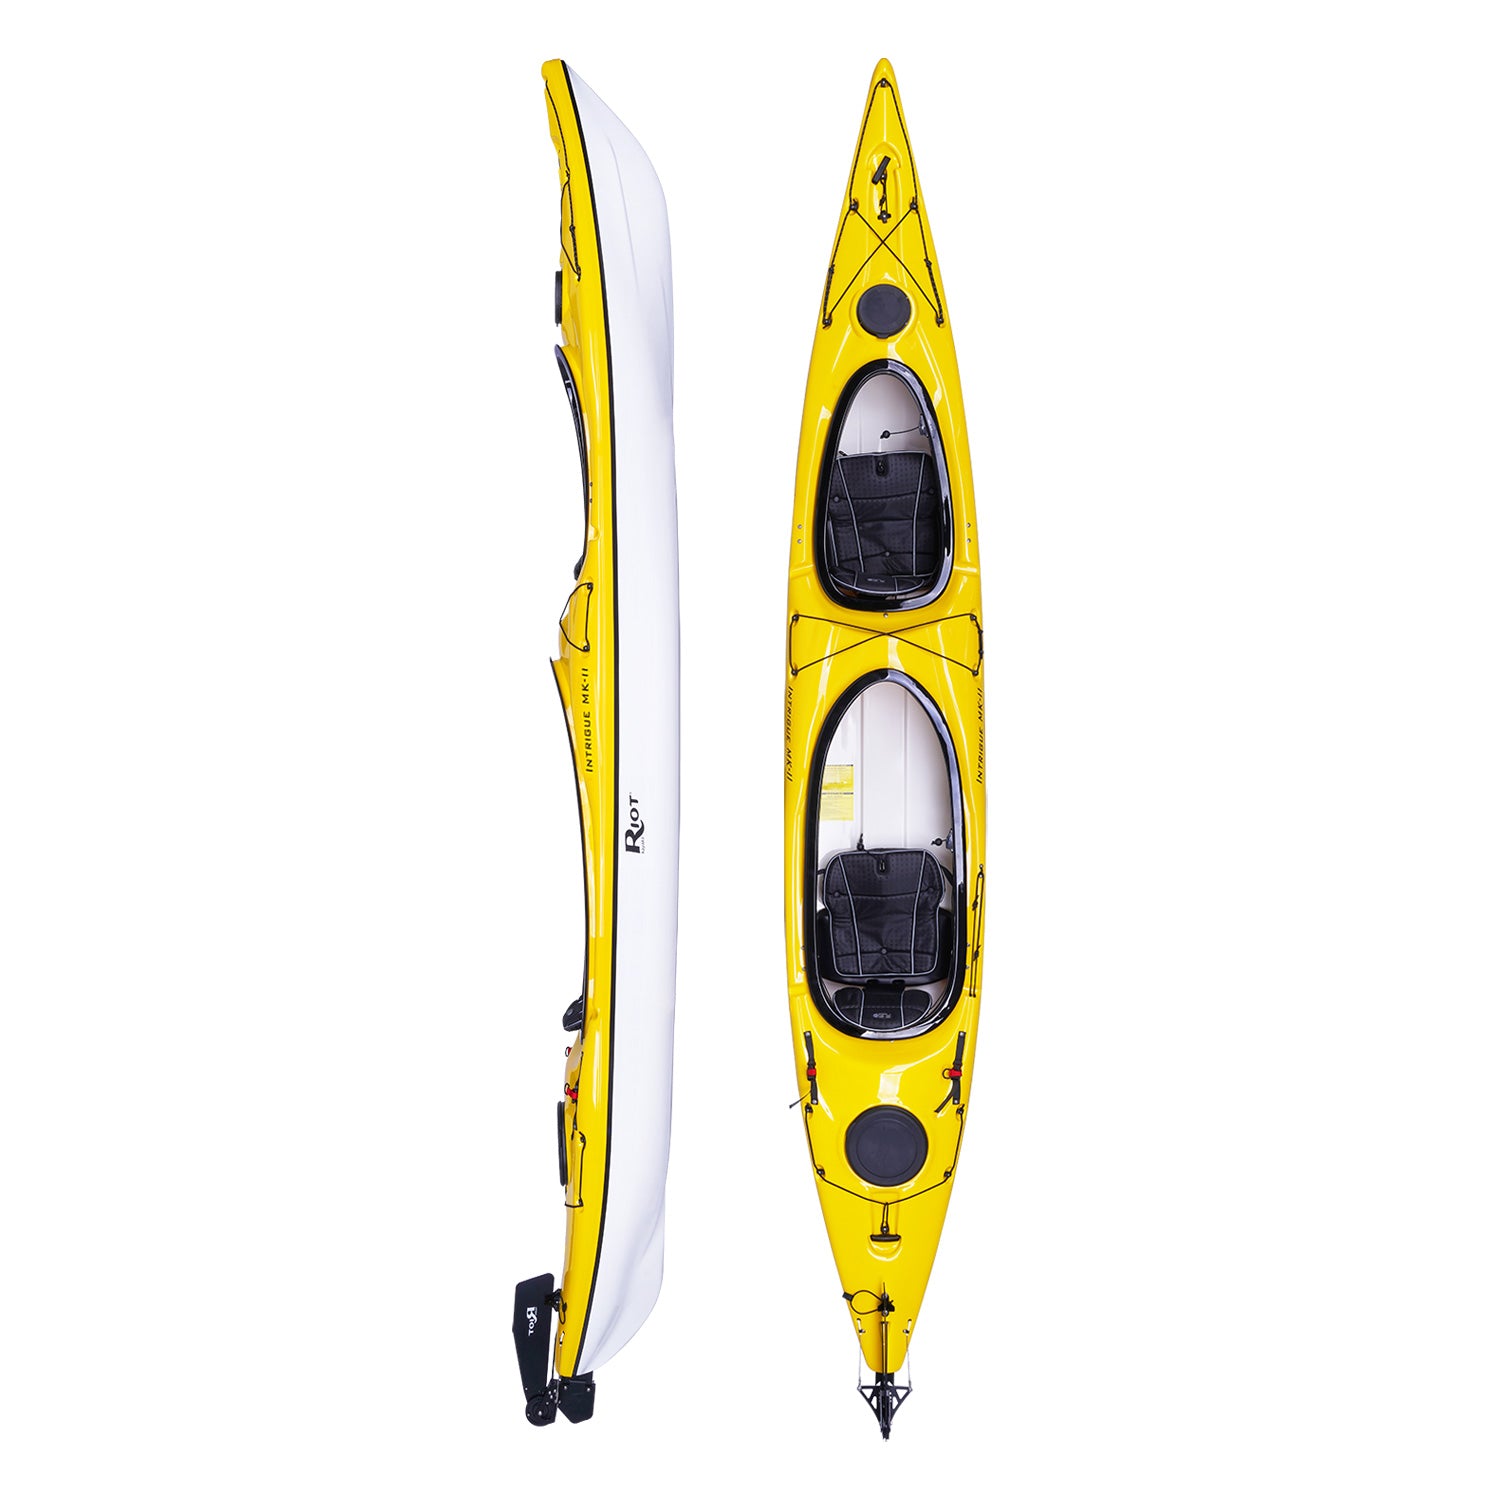 Intrigue 15 Ultralight MKII Tandem Kayak